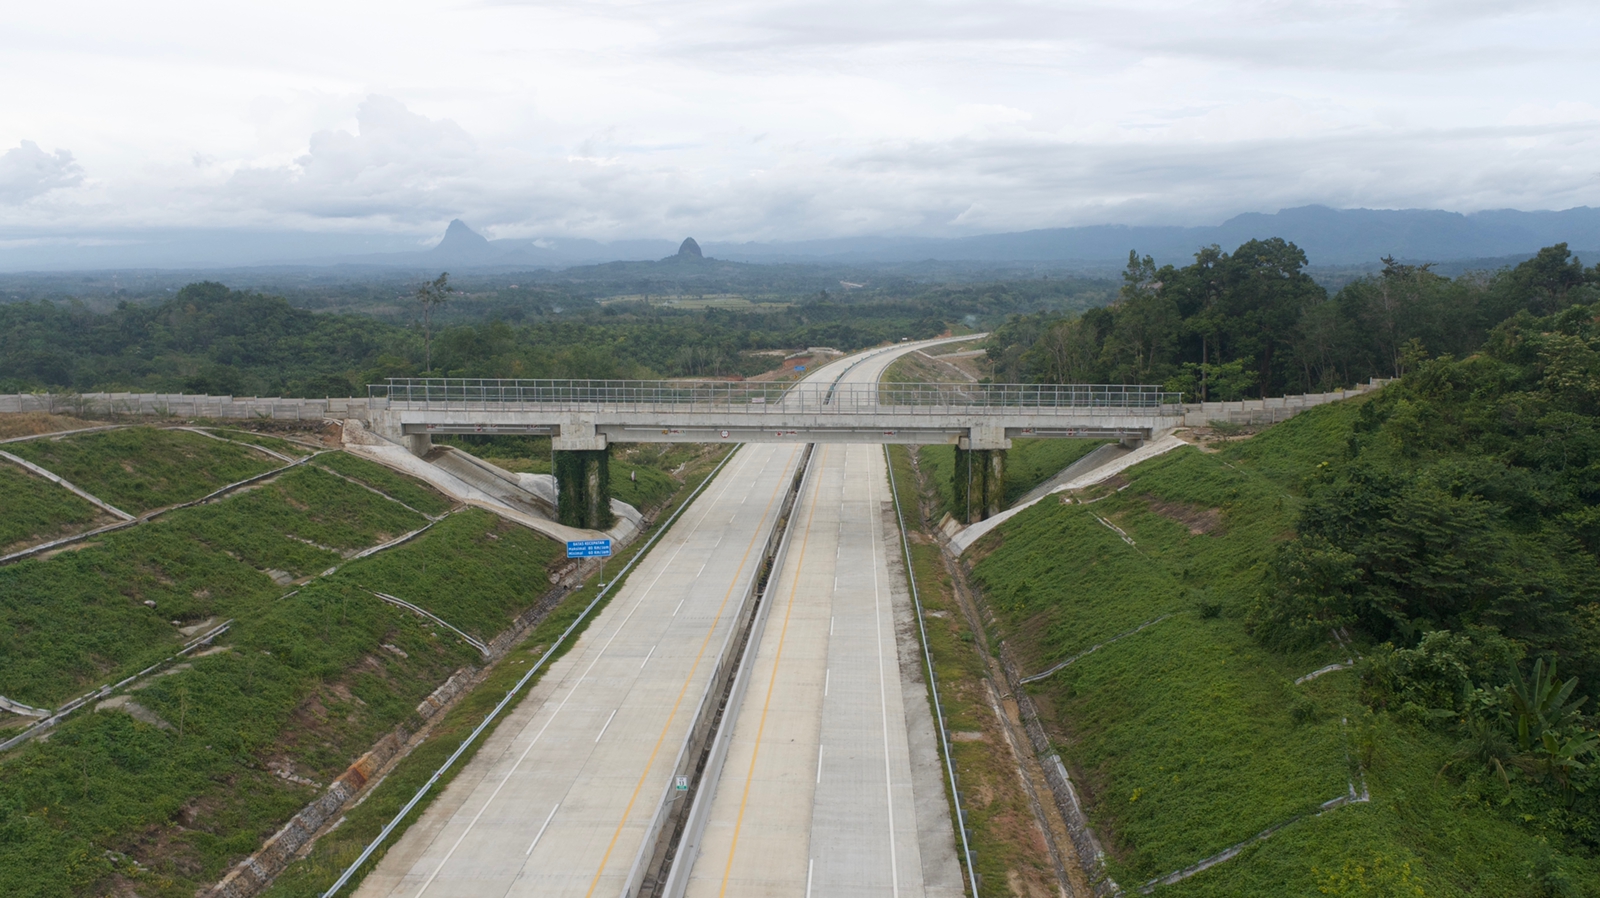 Jalan Tol Bengkulu - Lubuk Linggau Pasti Dilanjutkan, Tahapannya Ini